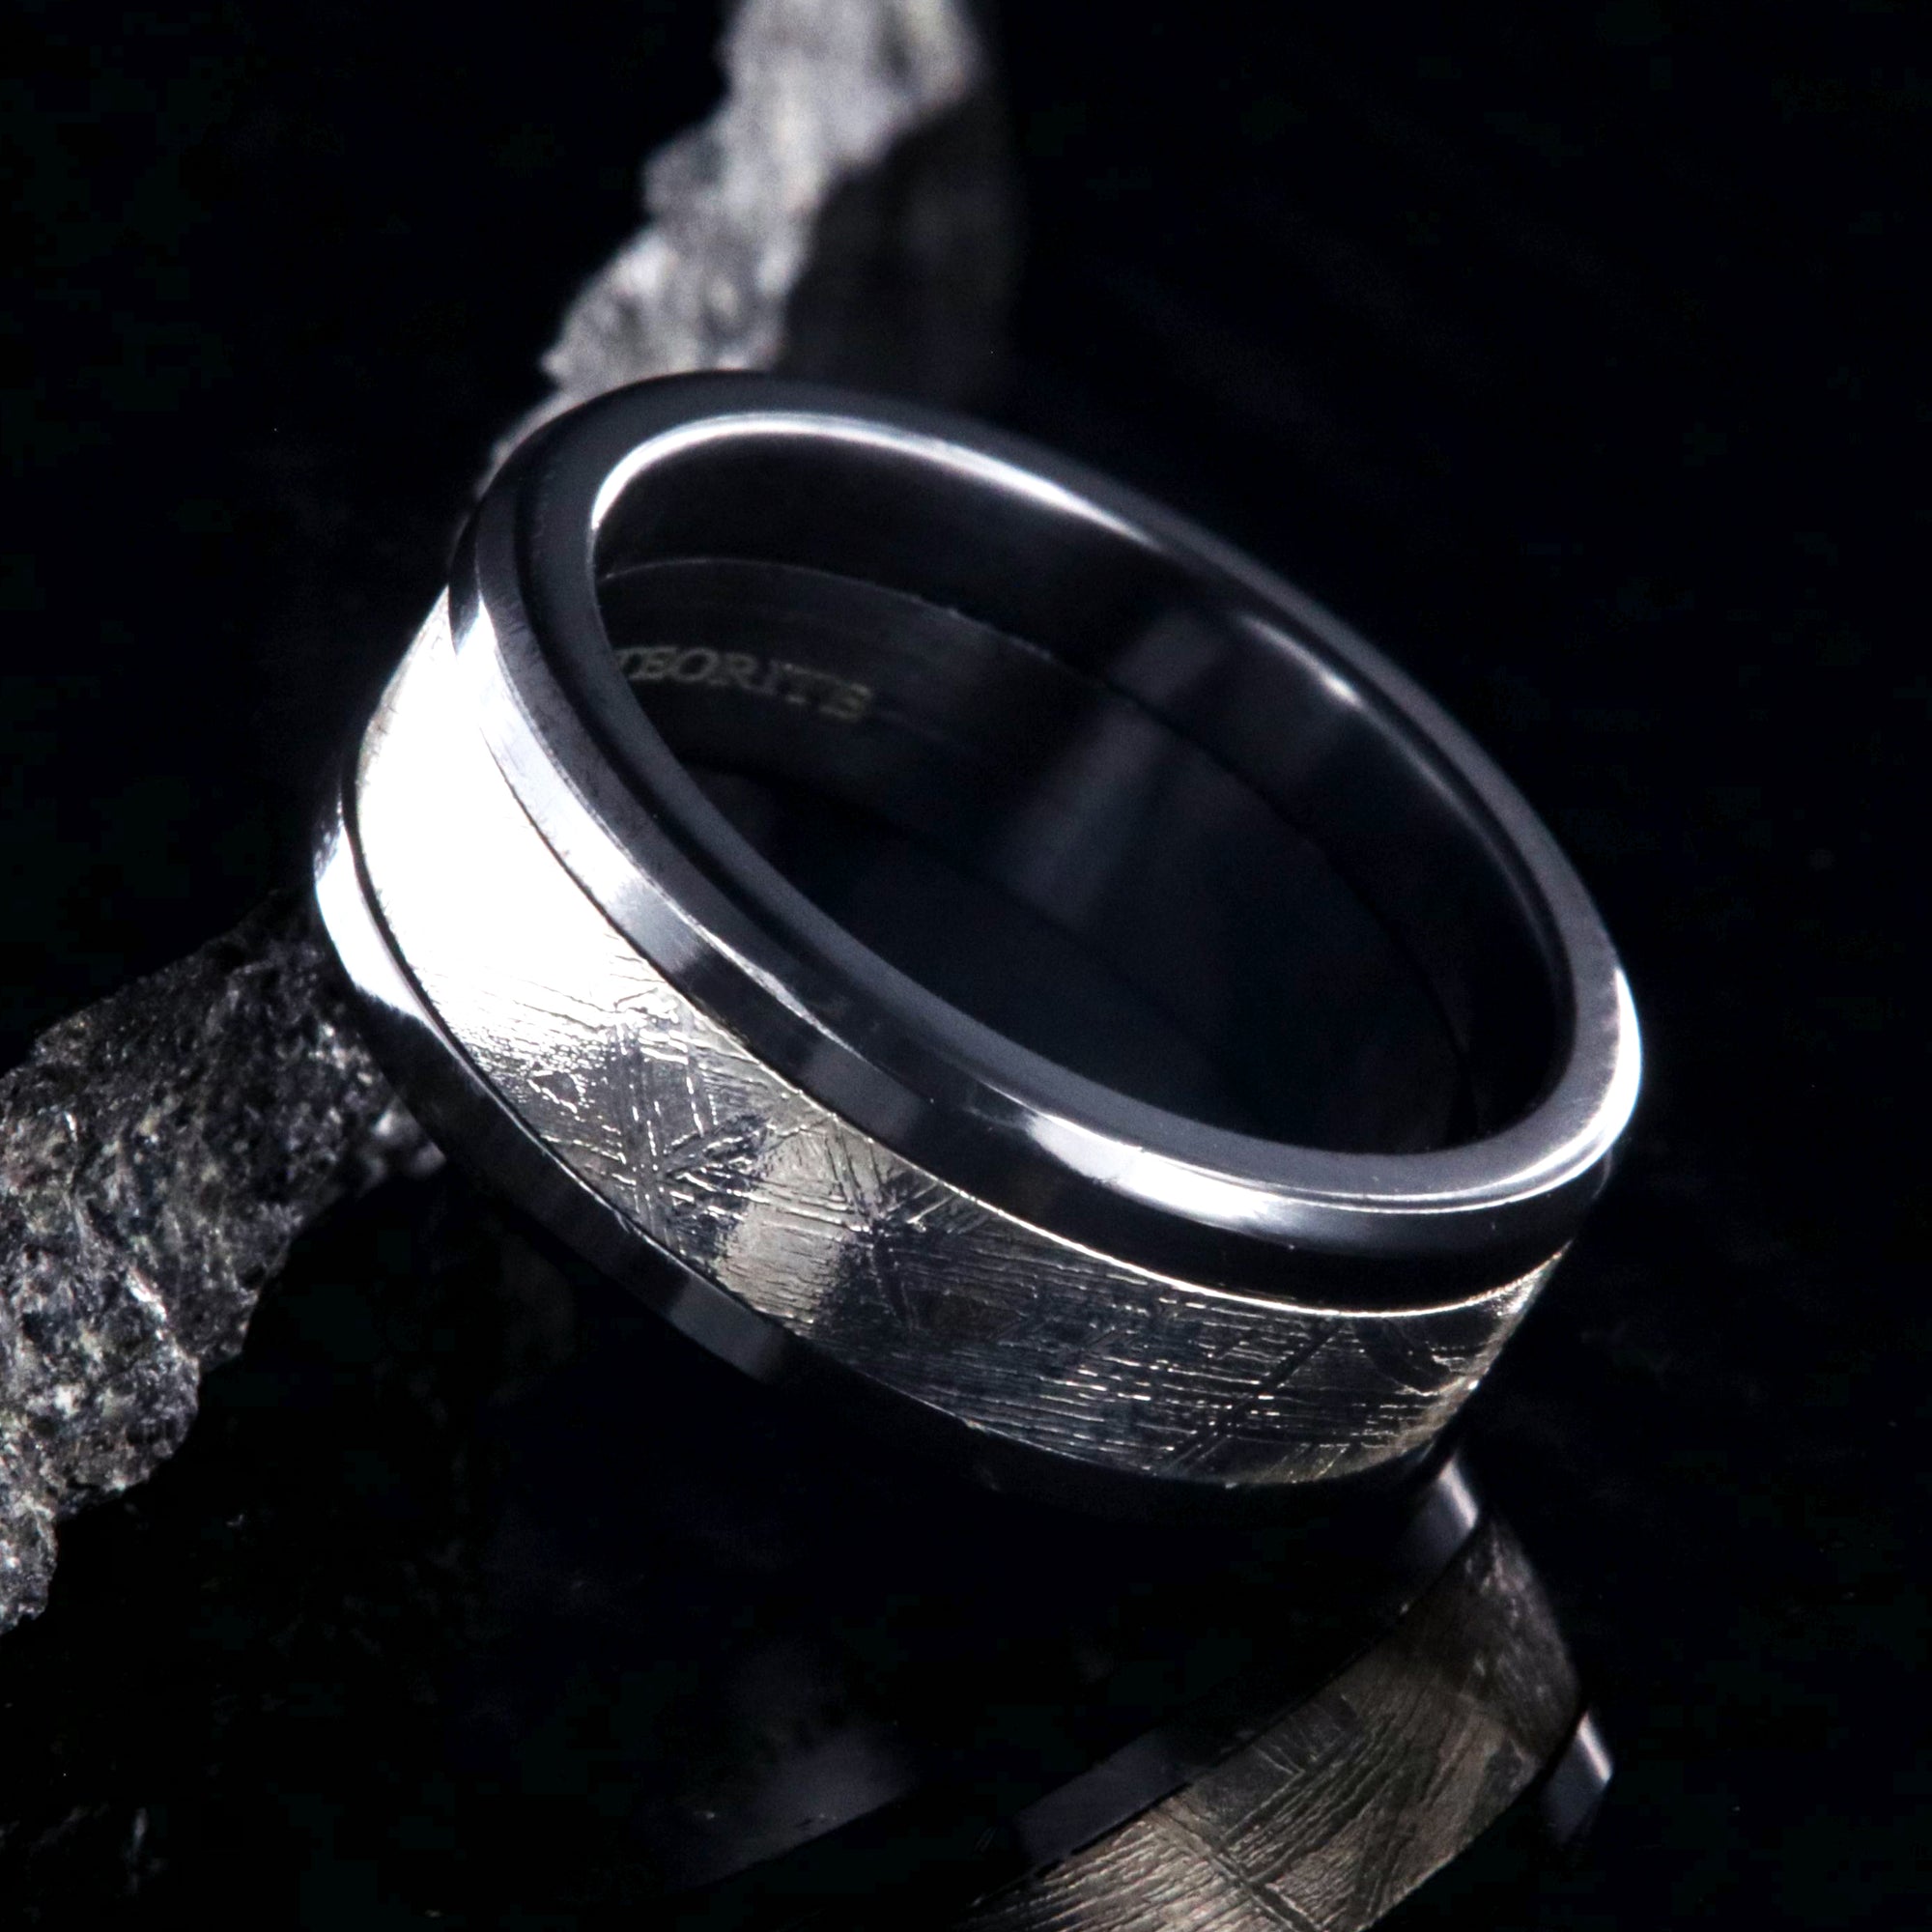 8mm wide meteorite ring with black zirconium edges and sleeve